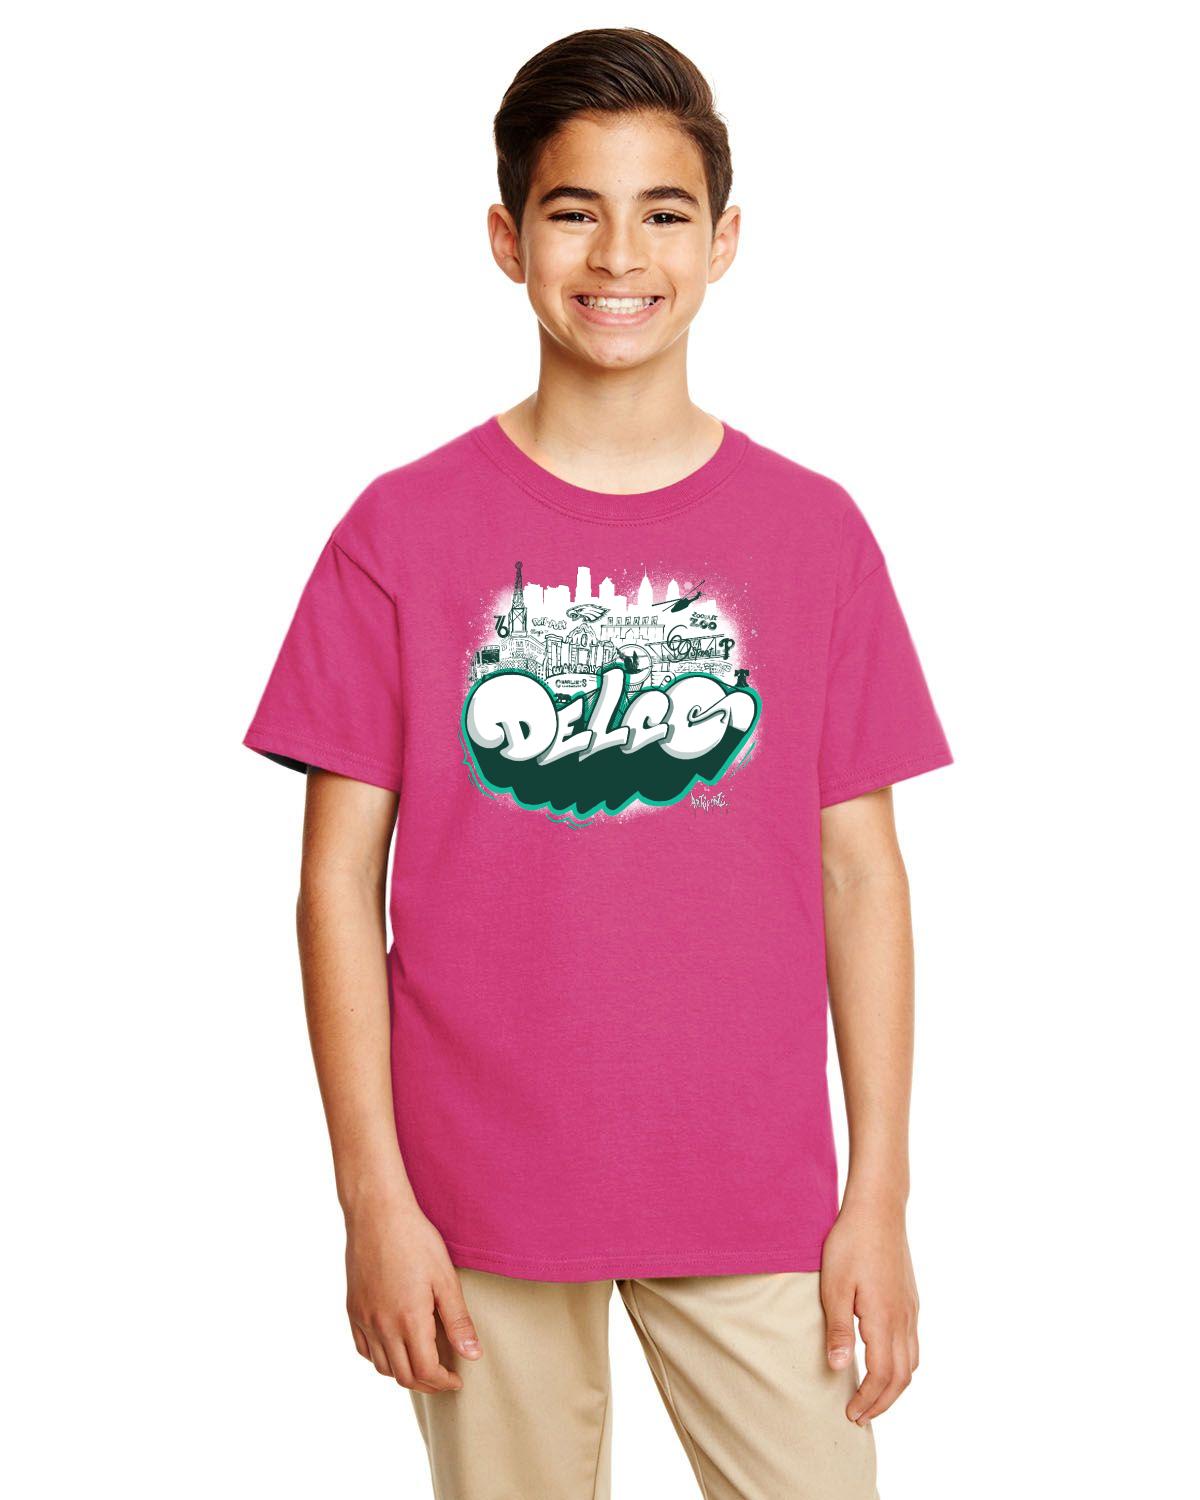 Delco Favorites Tour Gildan Youth Softstyle 7.5 oz./lin. yd. T-Shirt | G645B